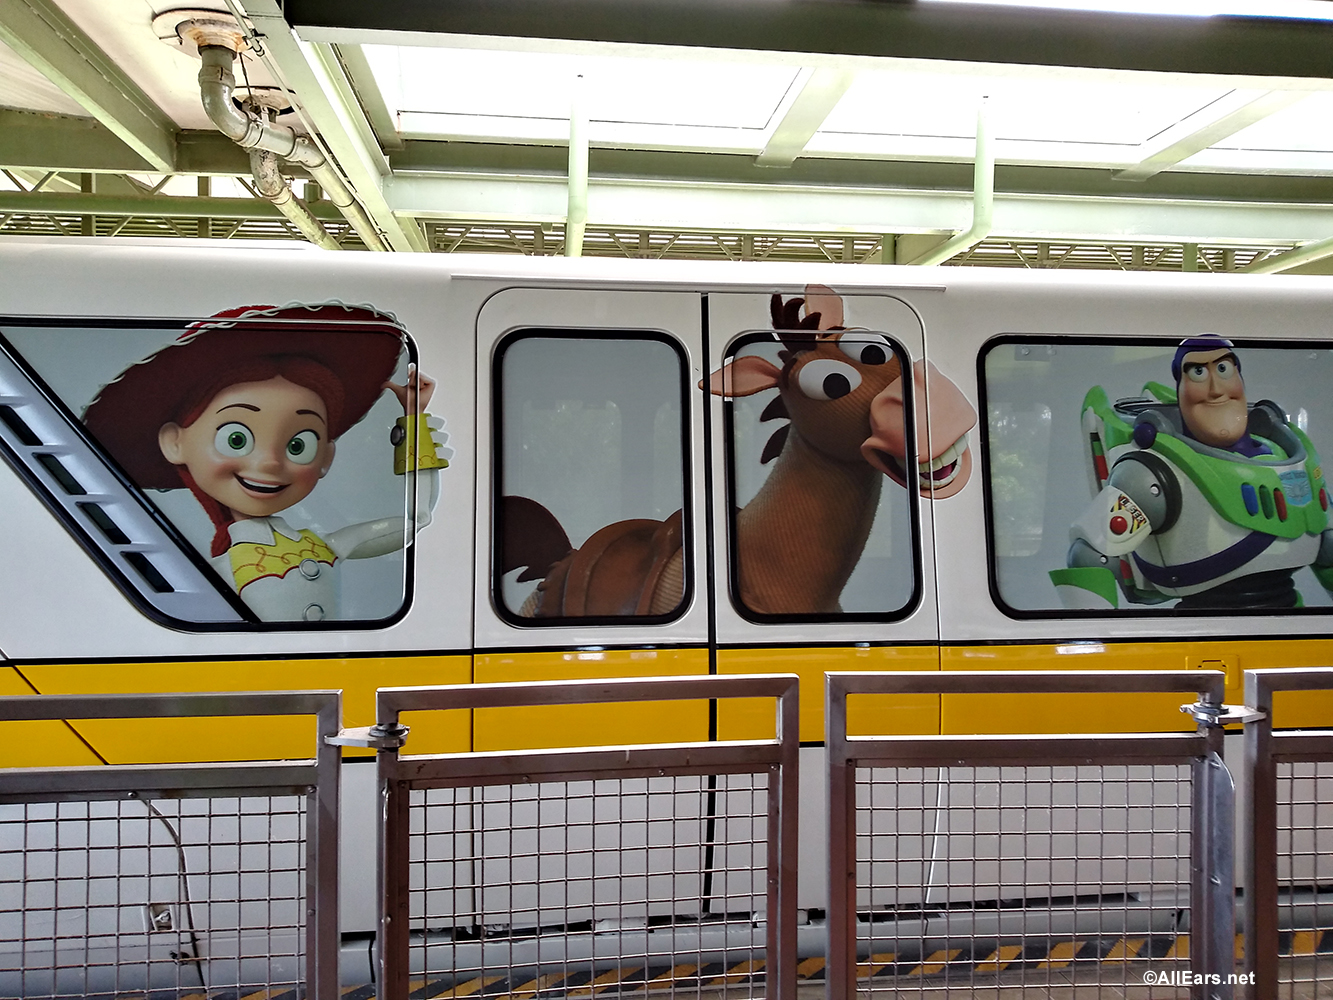 monorail toy train